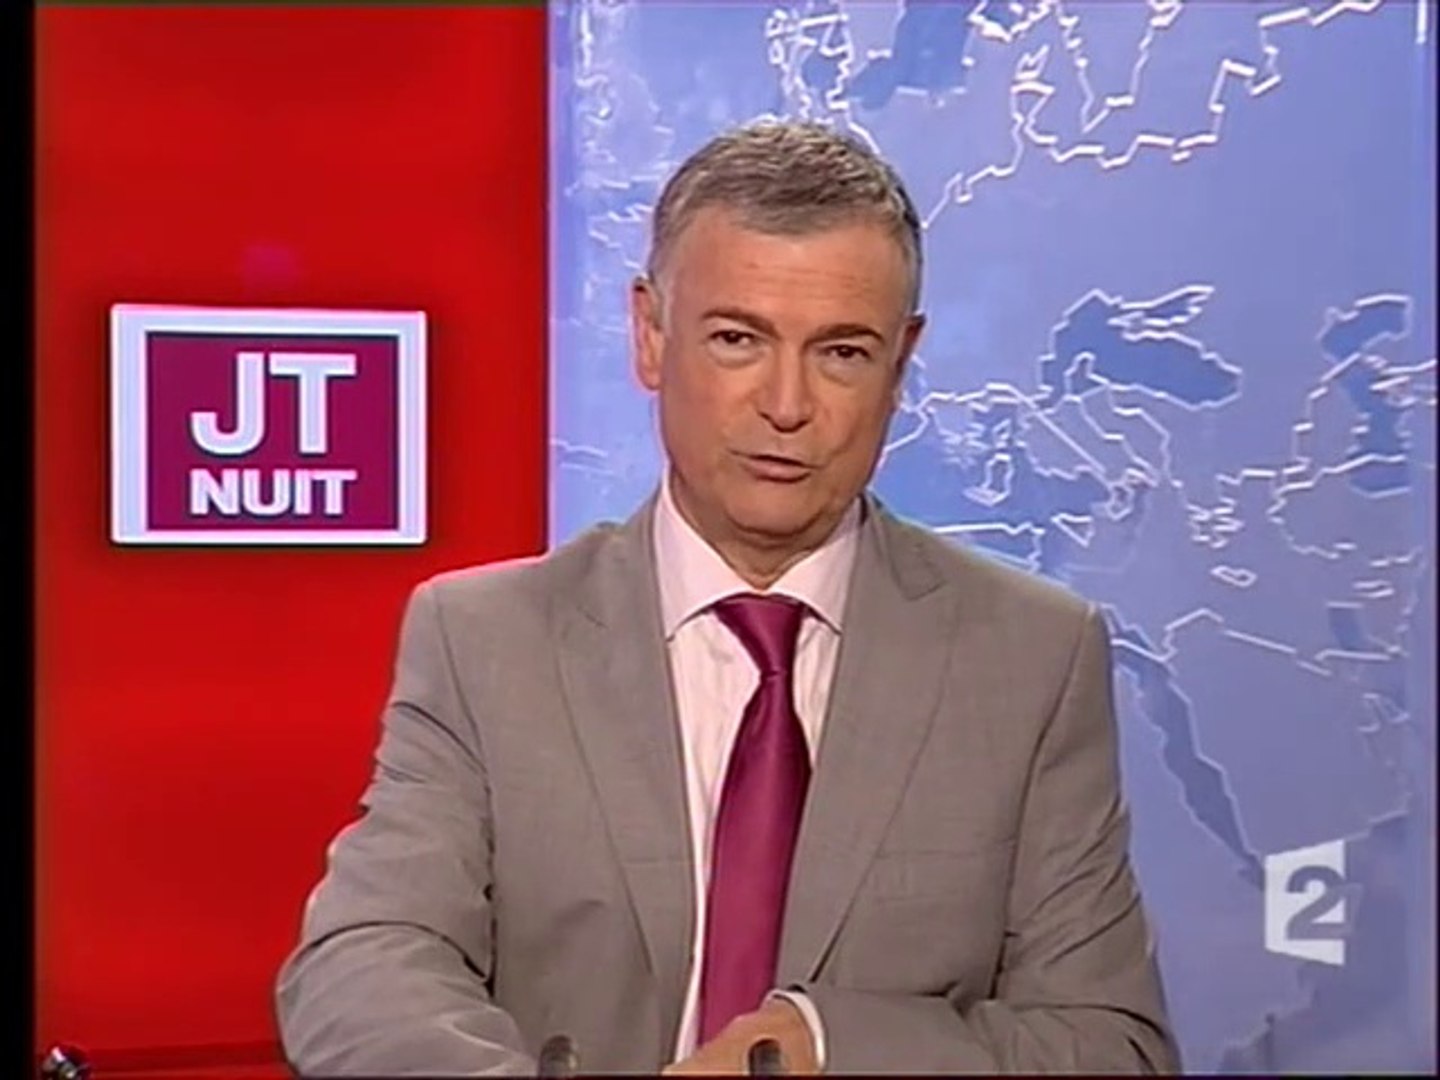 France 2 - 15 Mai 2007 - Teaser, JT Nuit (Jean-Claude Renaud) - Vidéo  Dailymotion